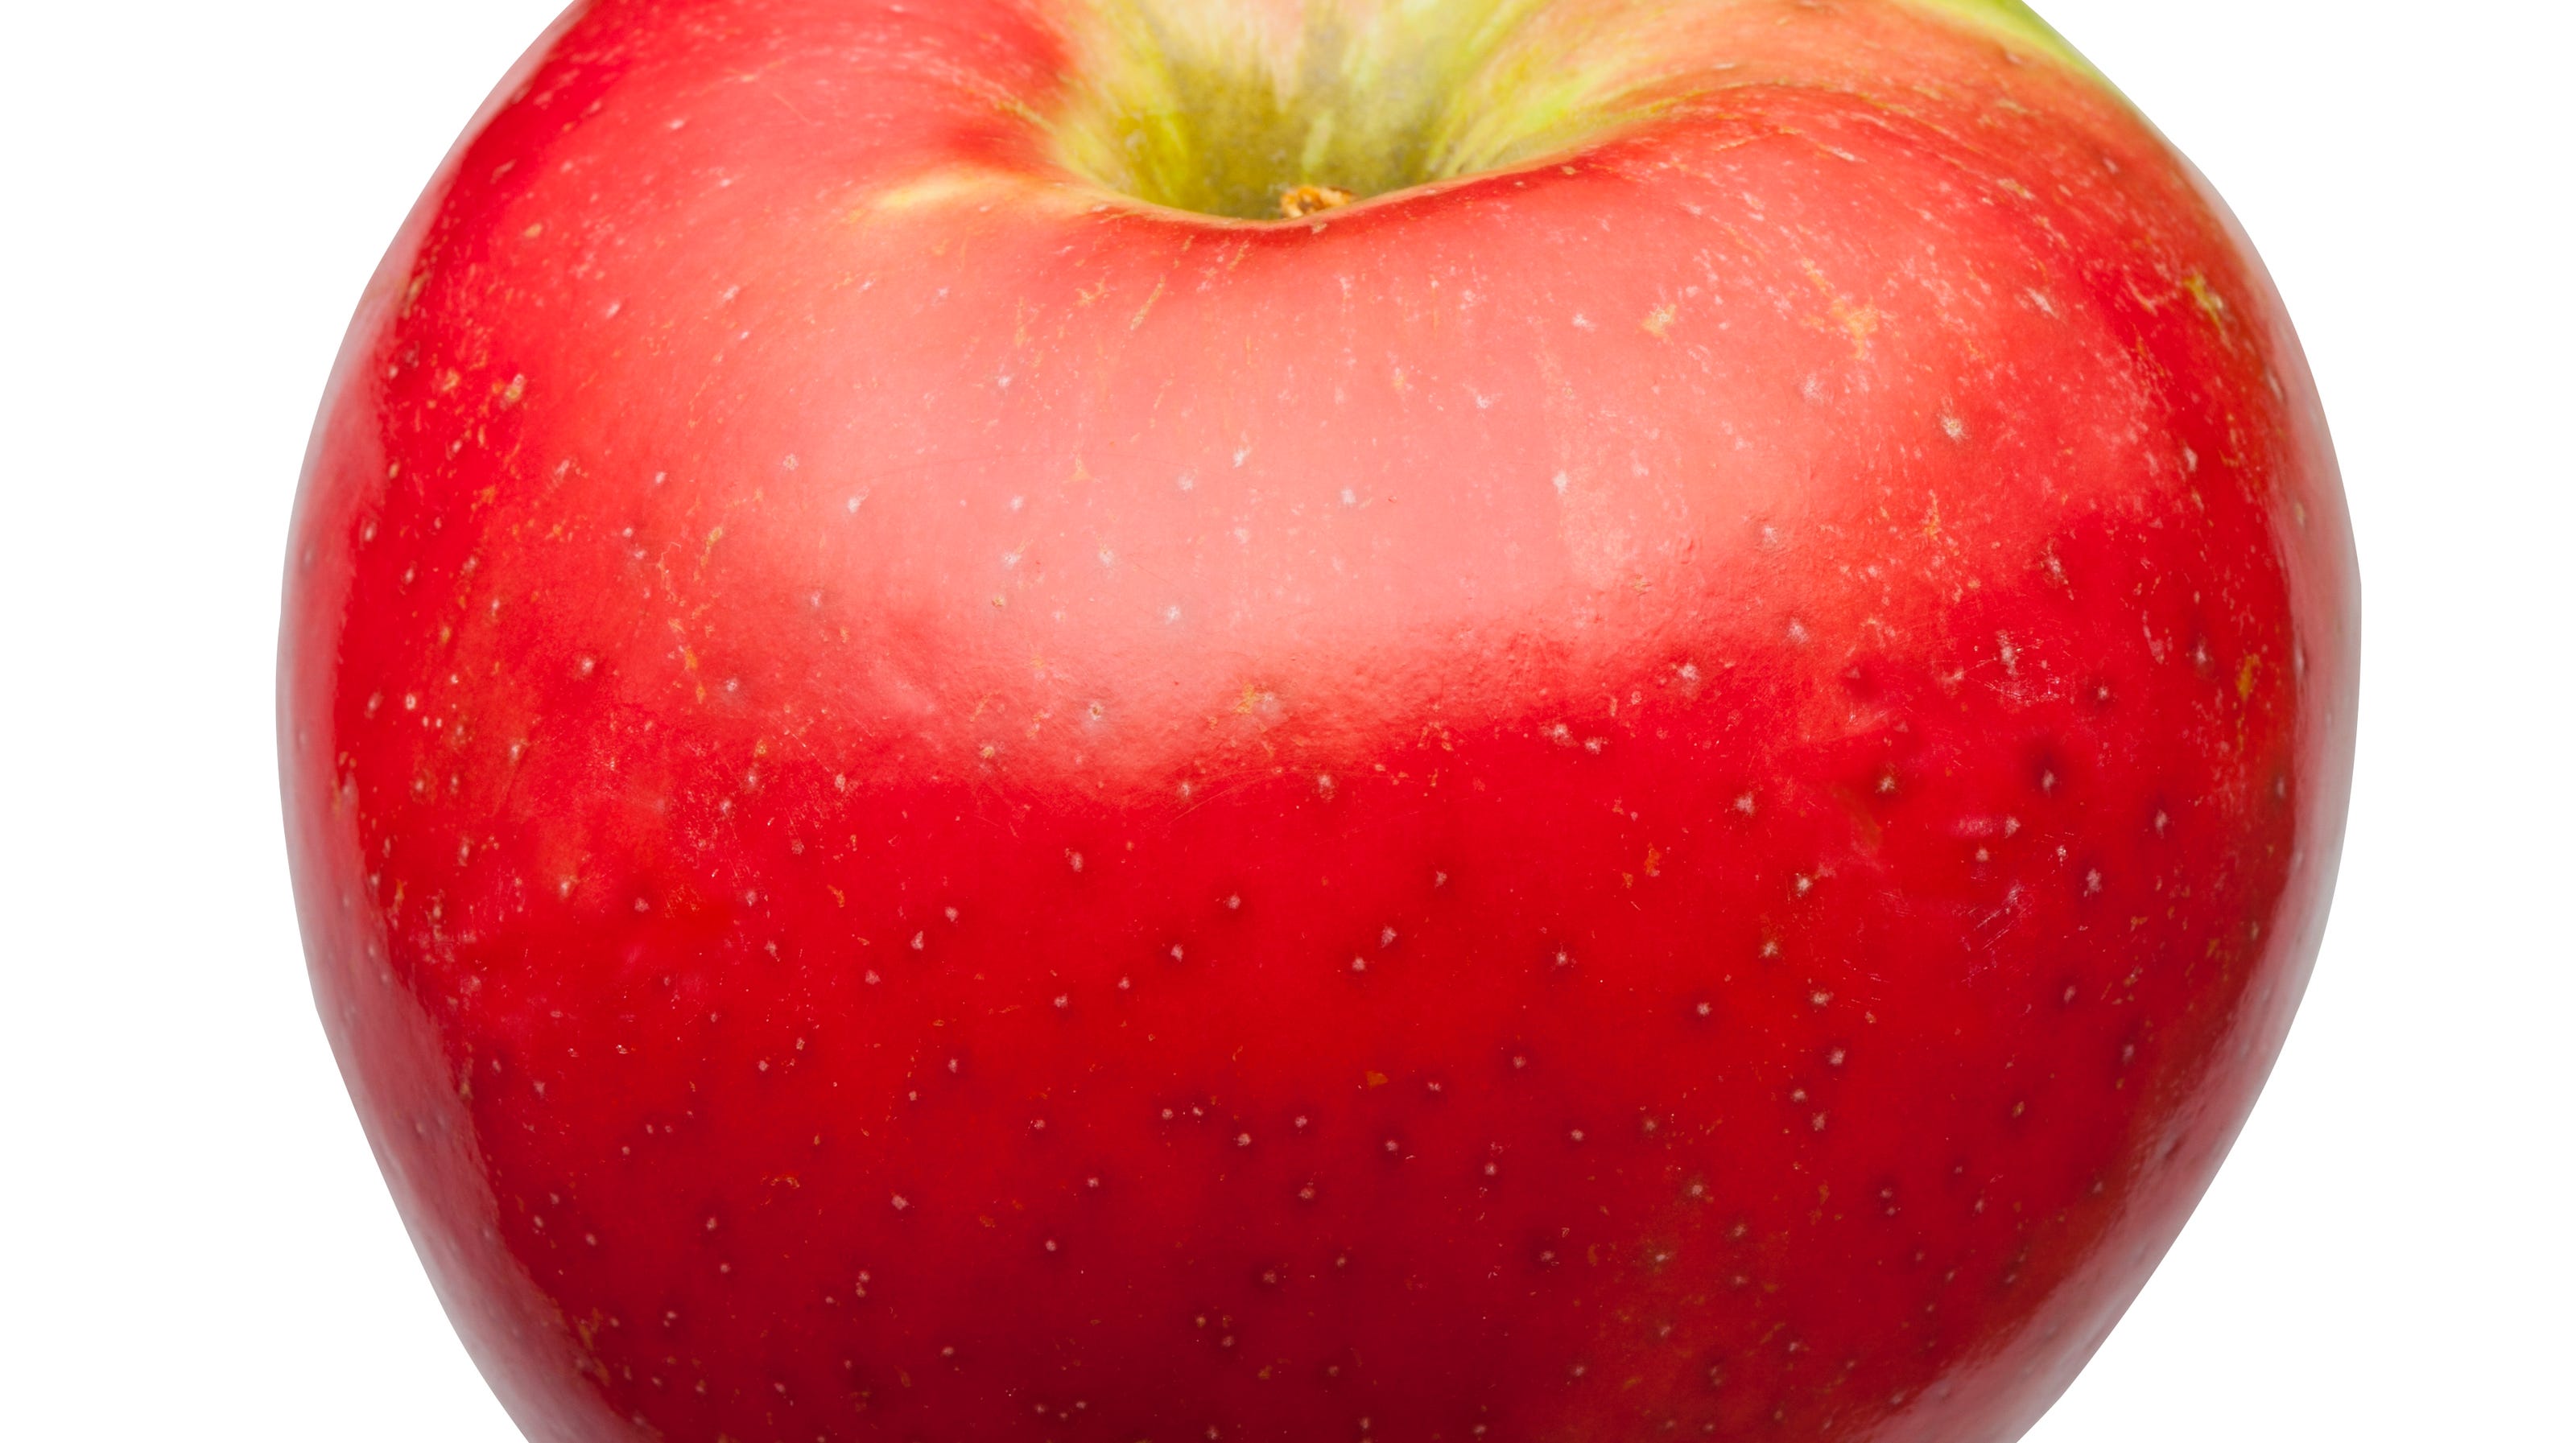 Popular Honeycrisp apple among those recalled by Michigan produce company